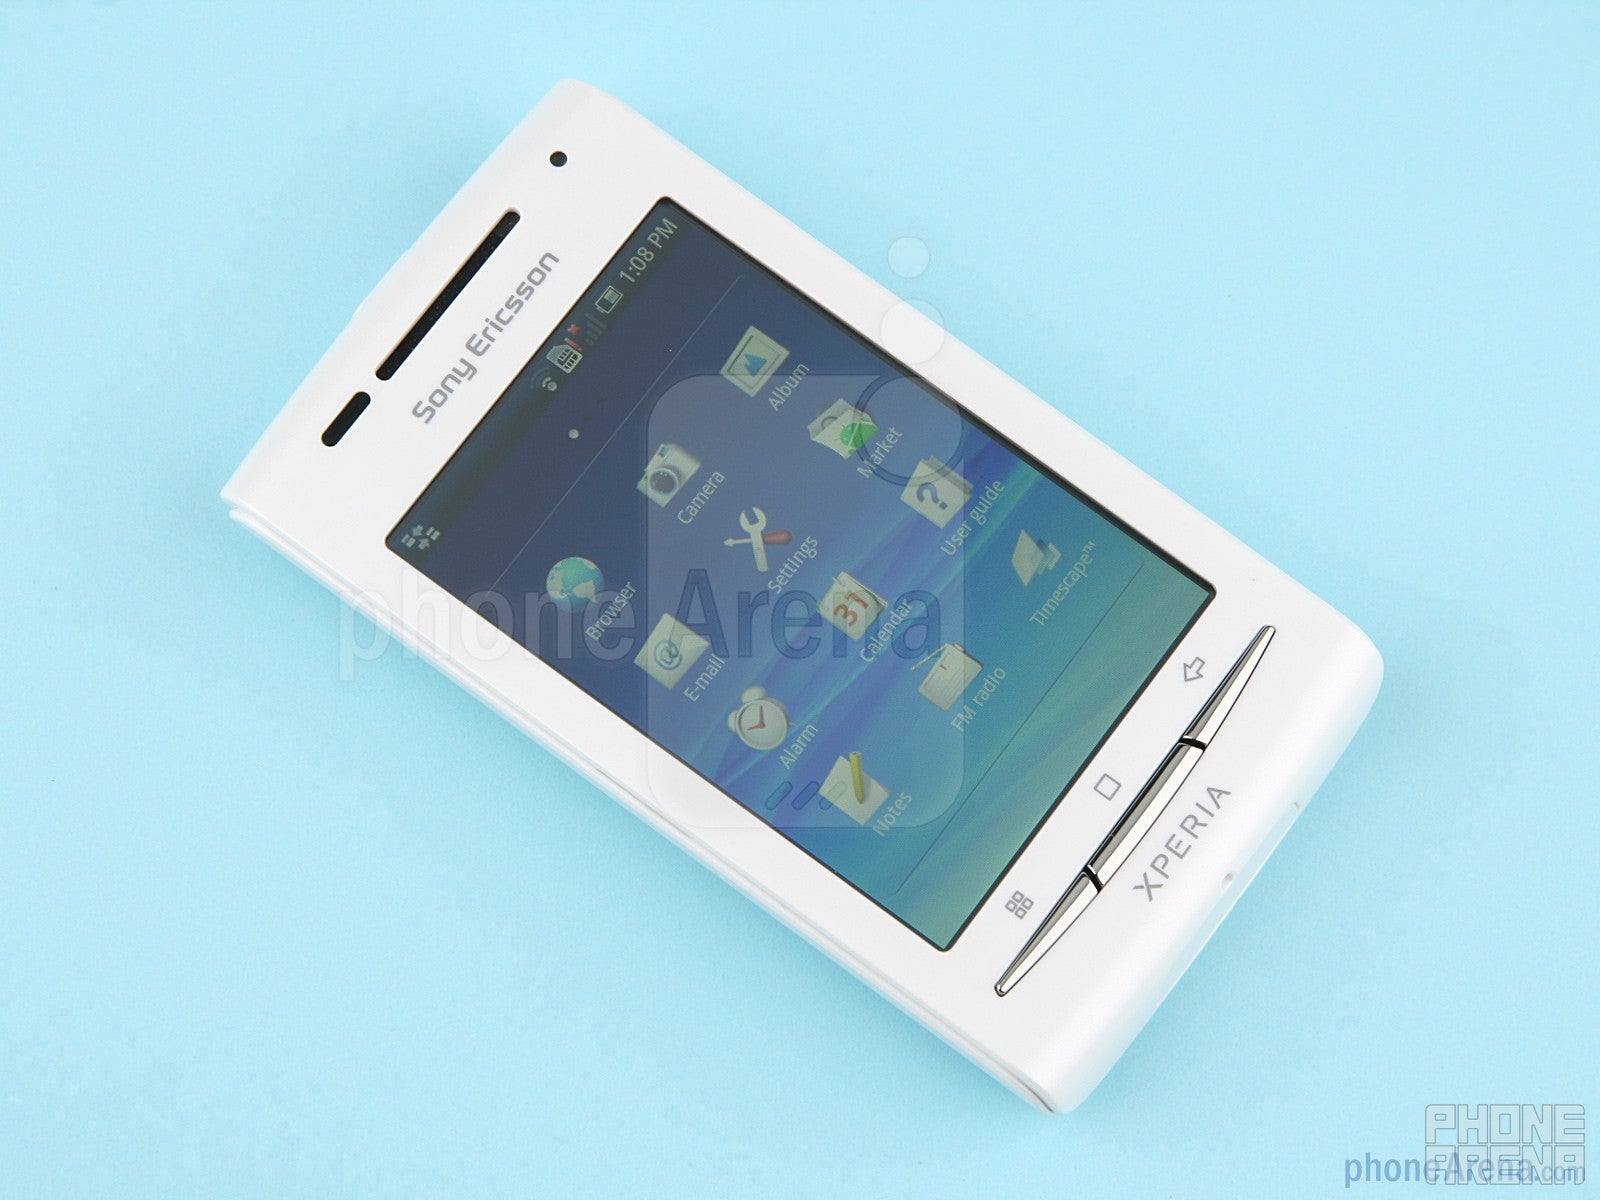 Sony Ericsson Xperia X8 Review